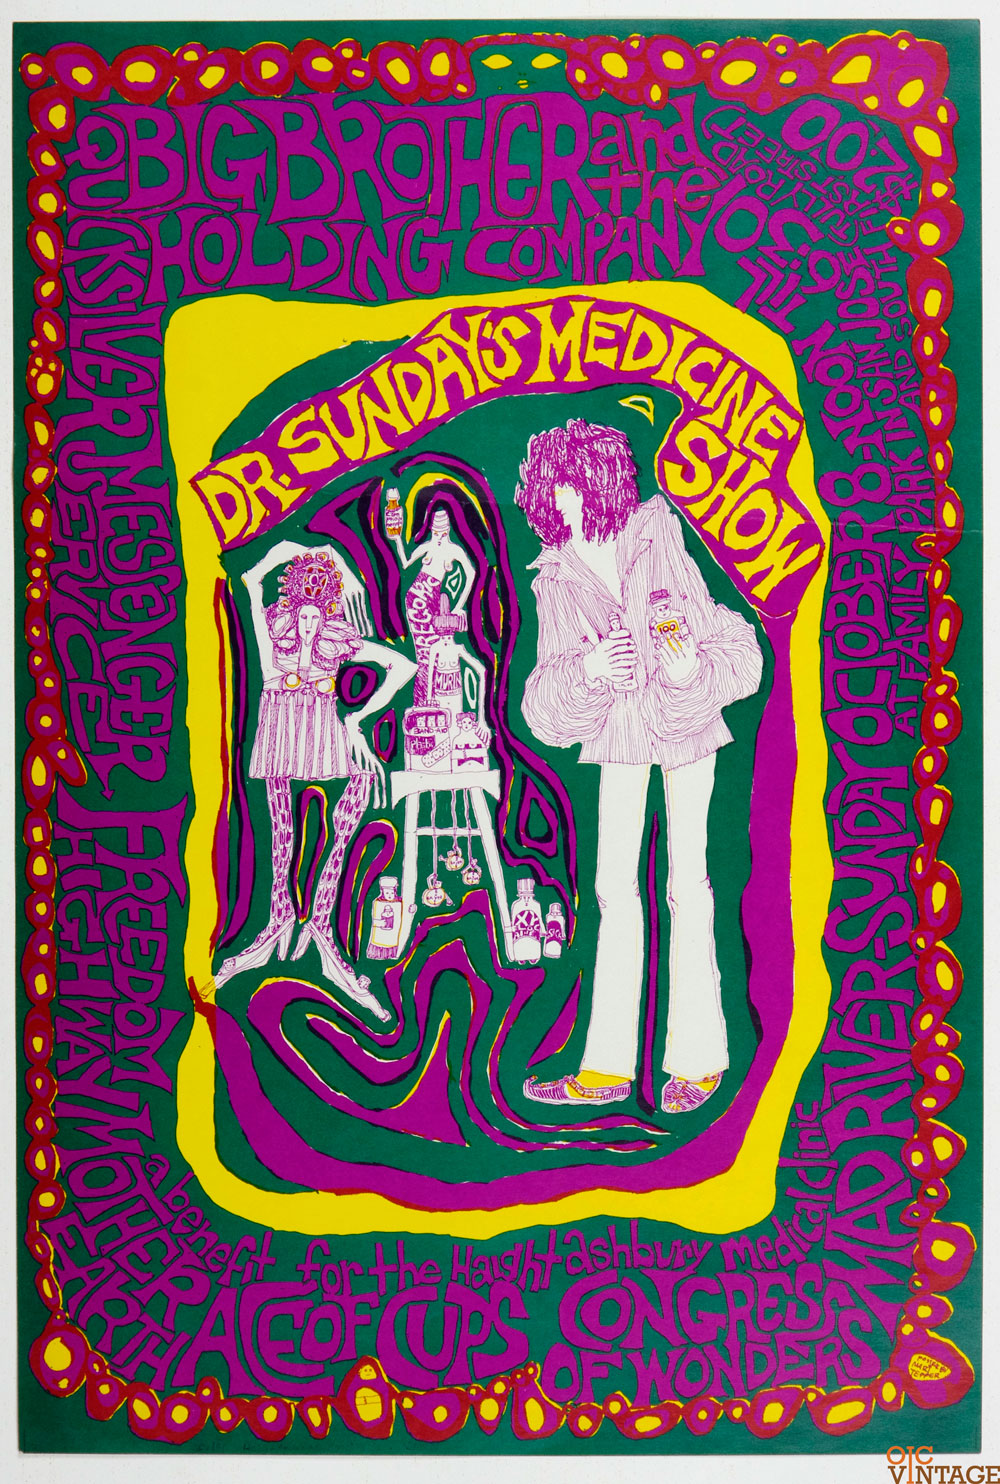 Height and Ashbury Clinic Benefit Concert Poster 1967 San Jose AOR 2.339